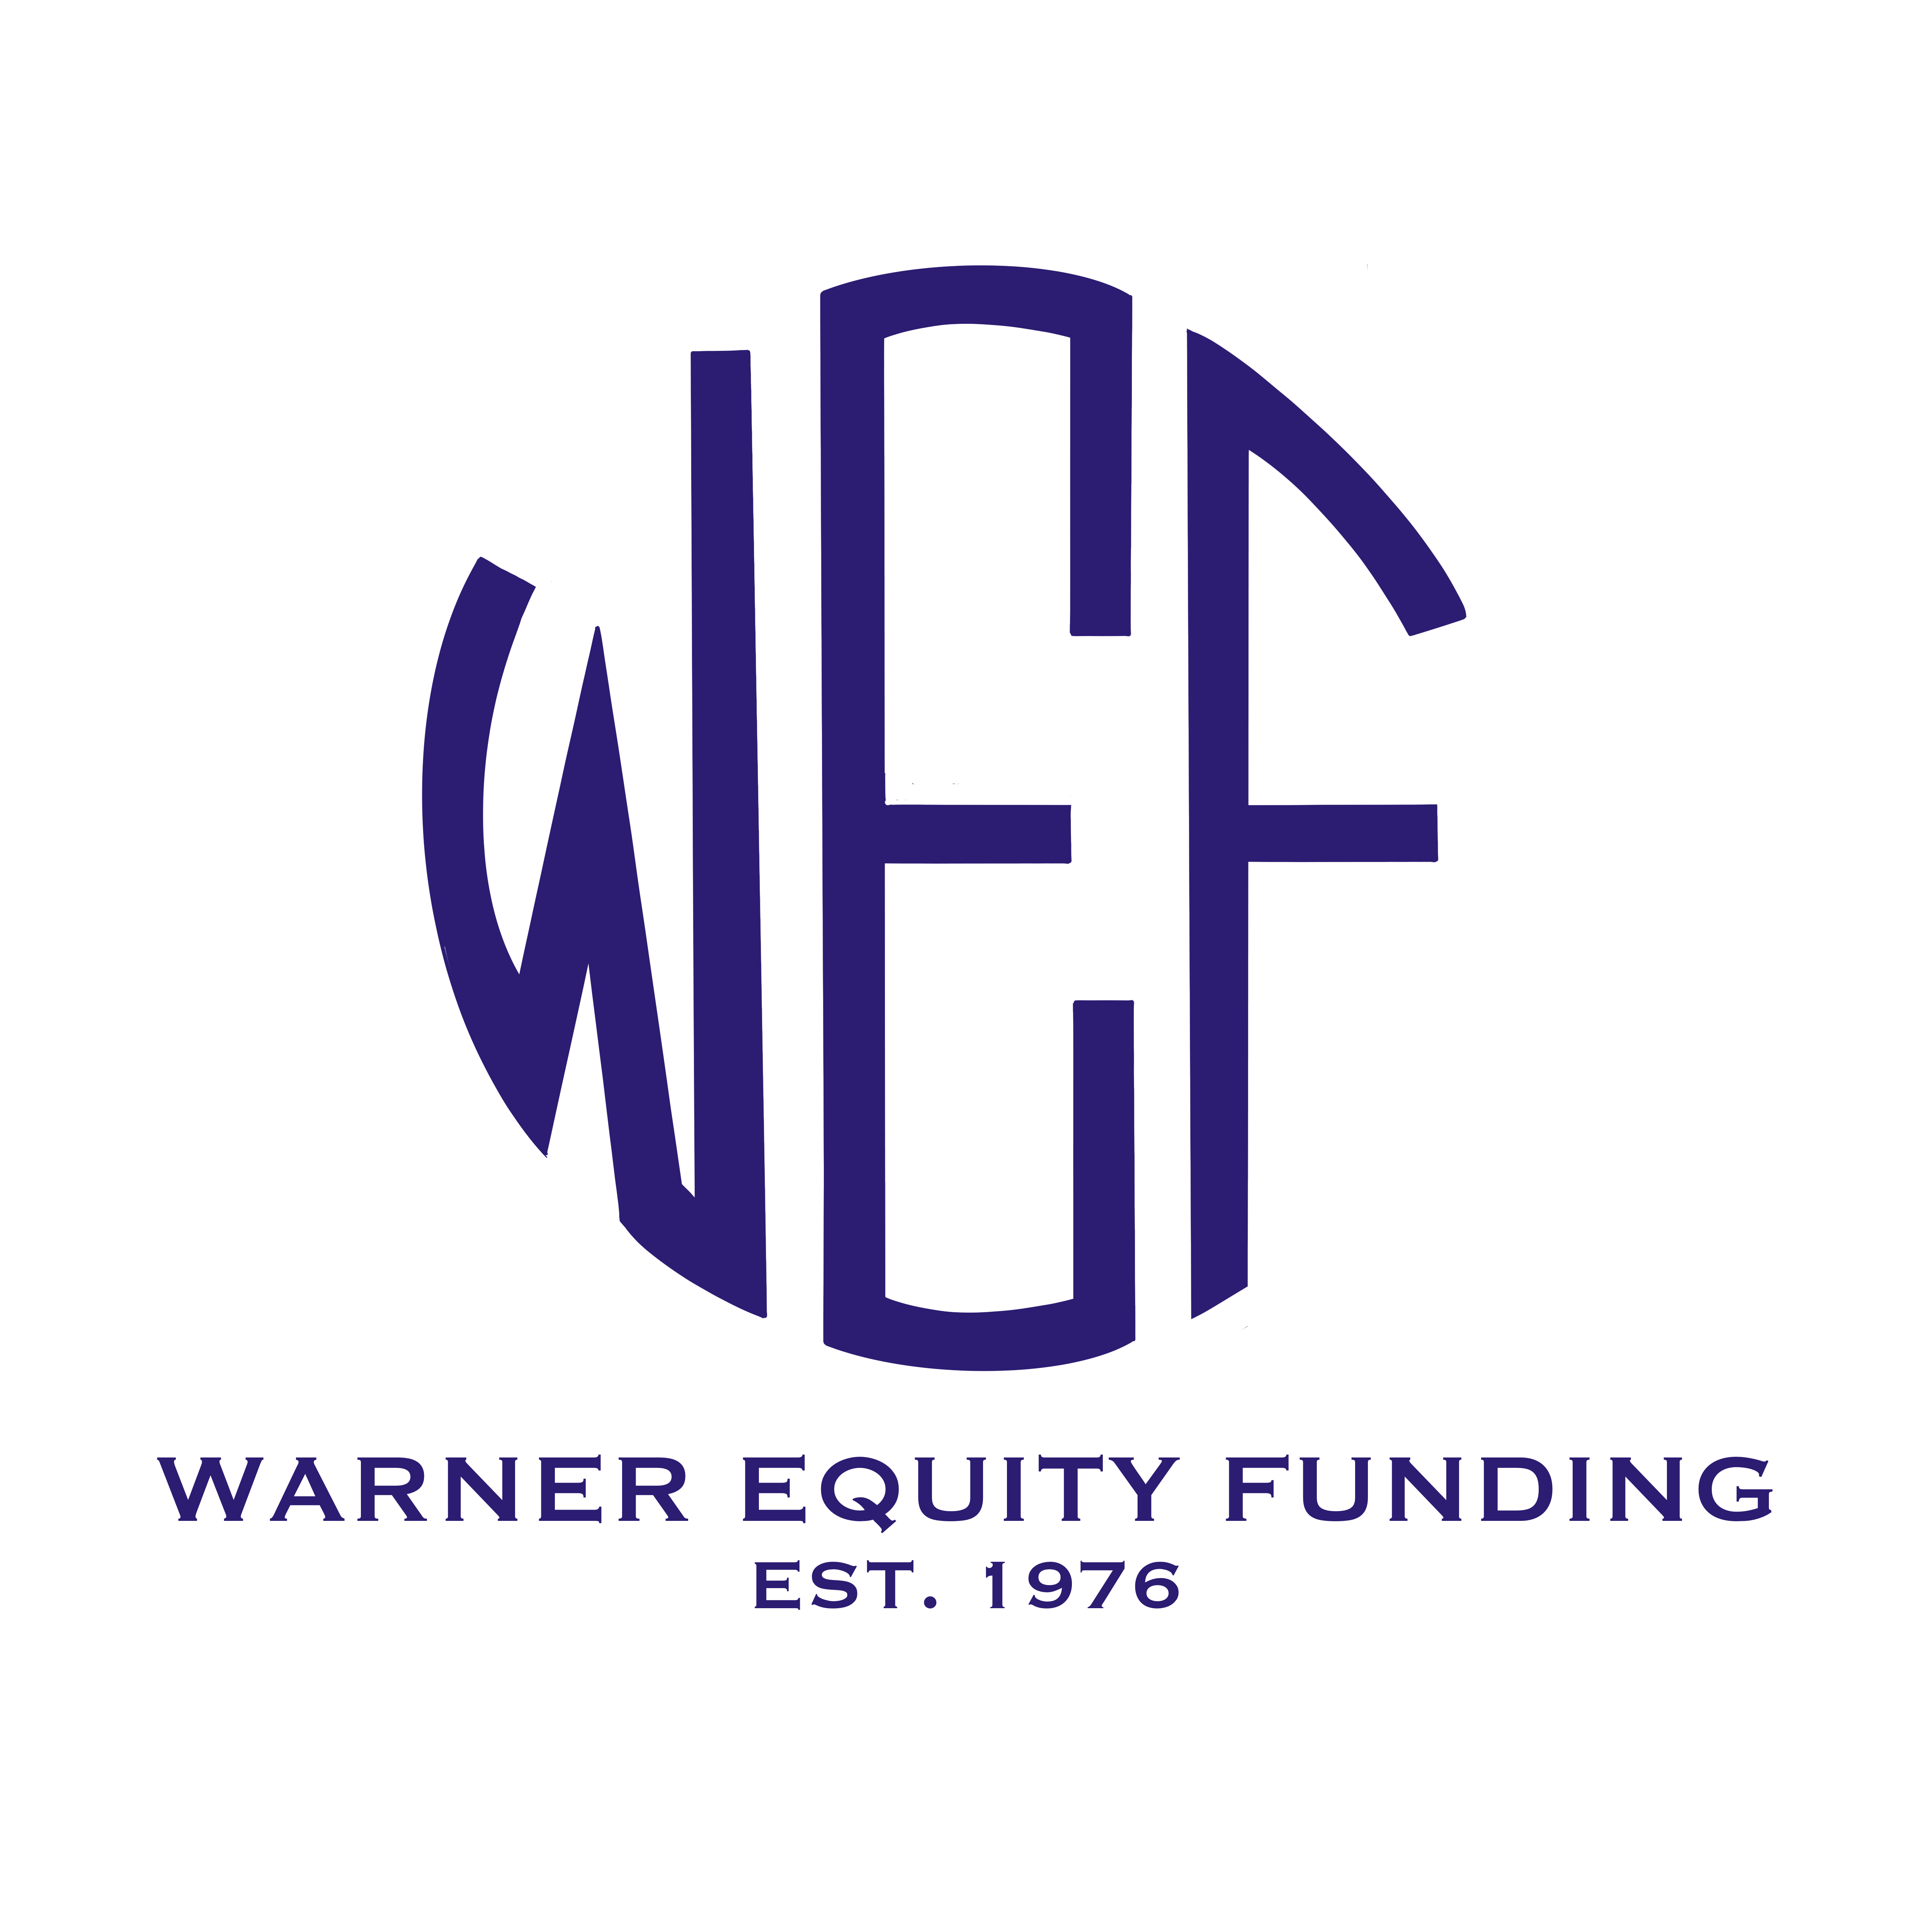 Warner equity funding